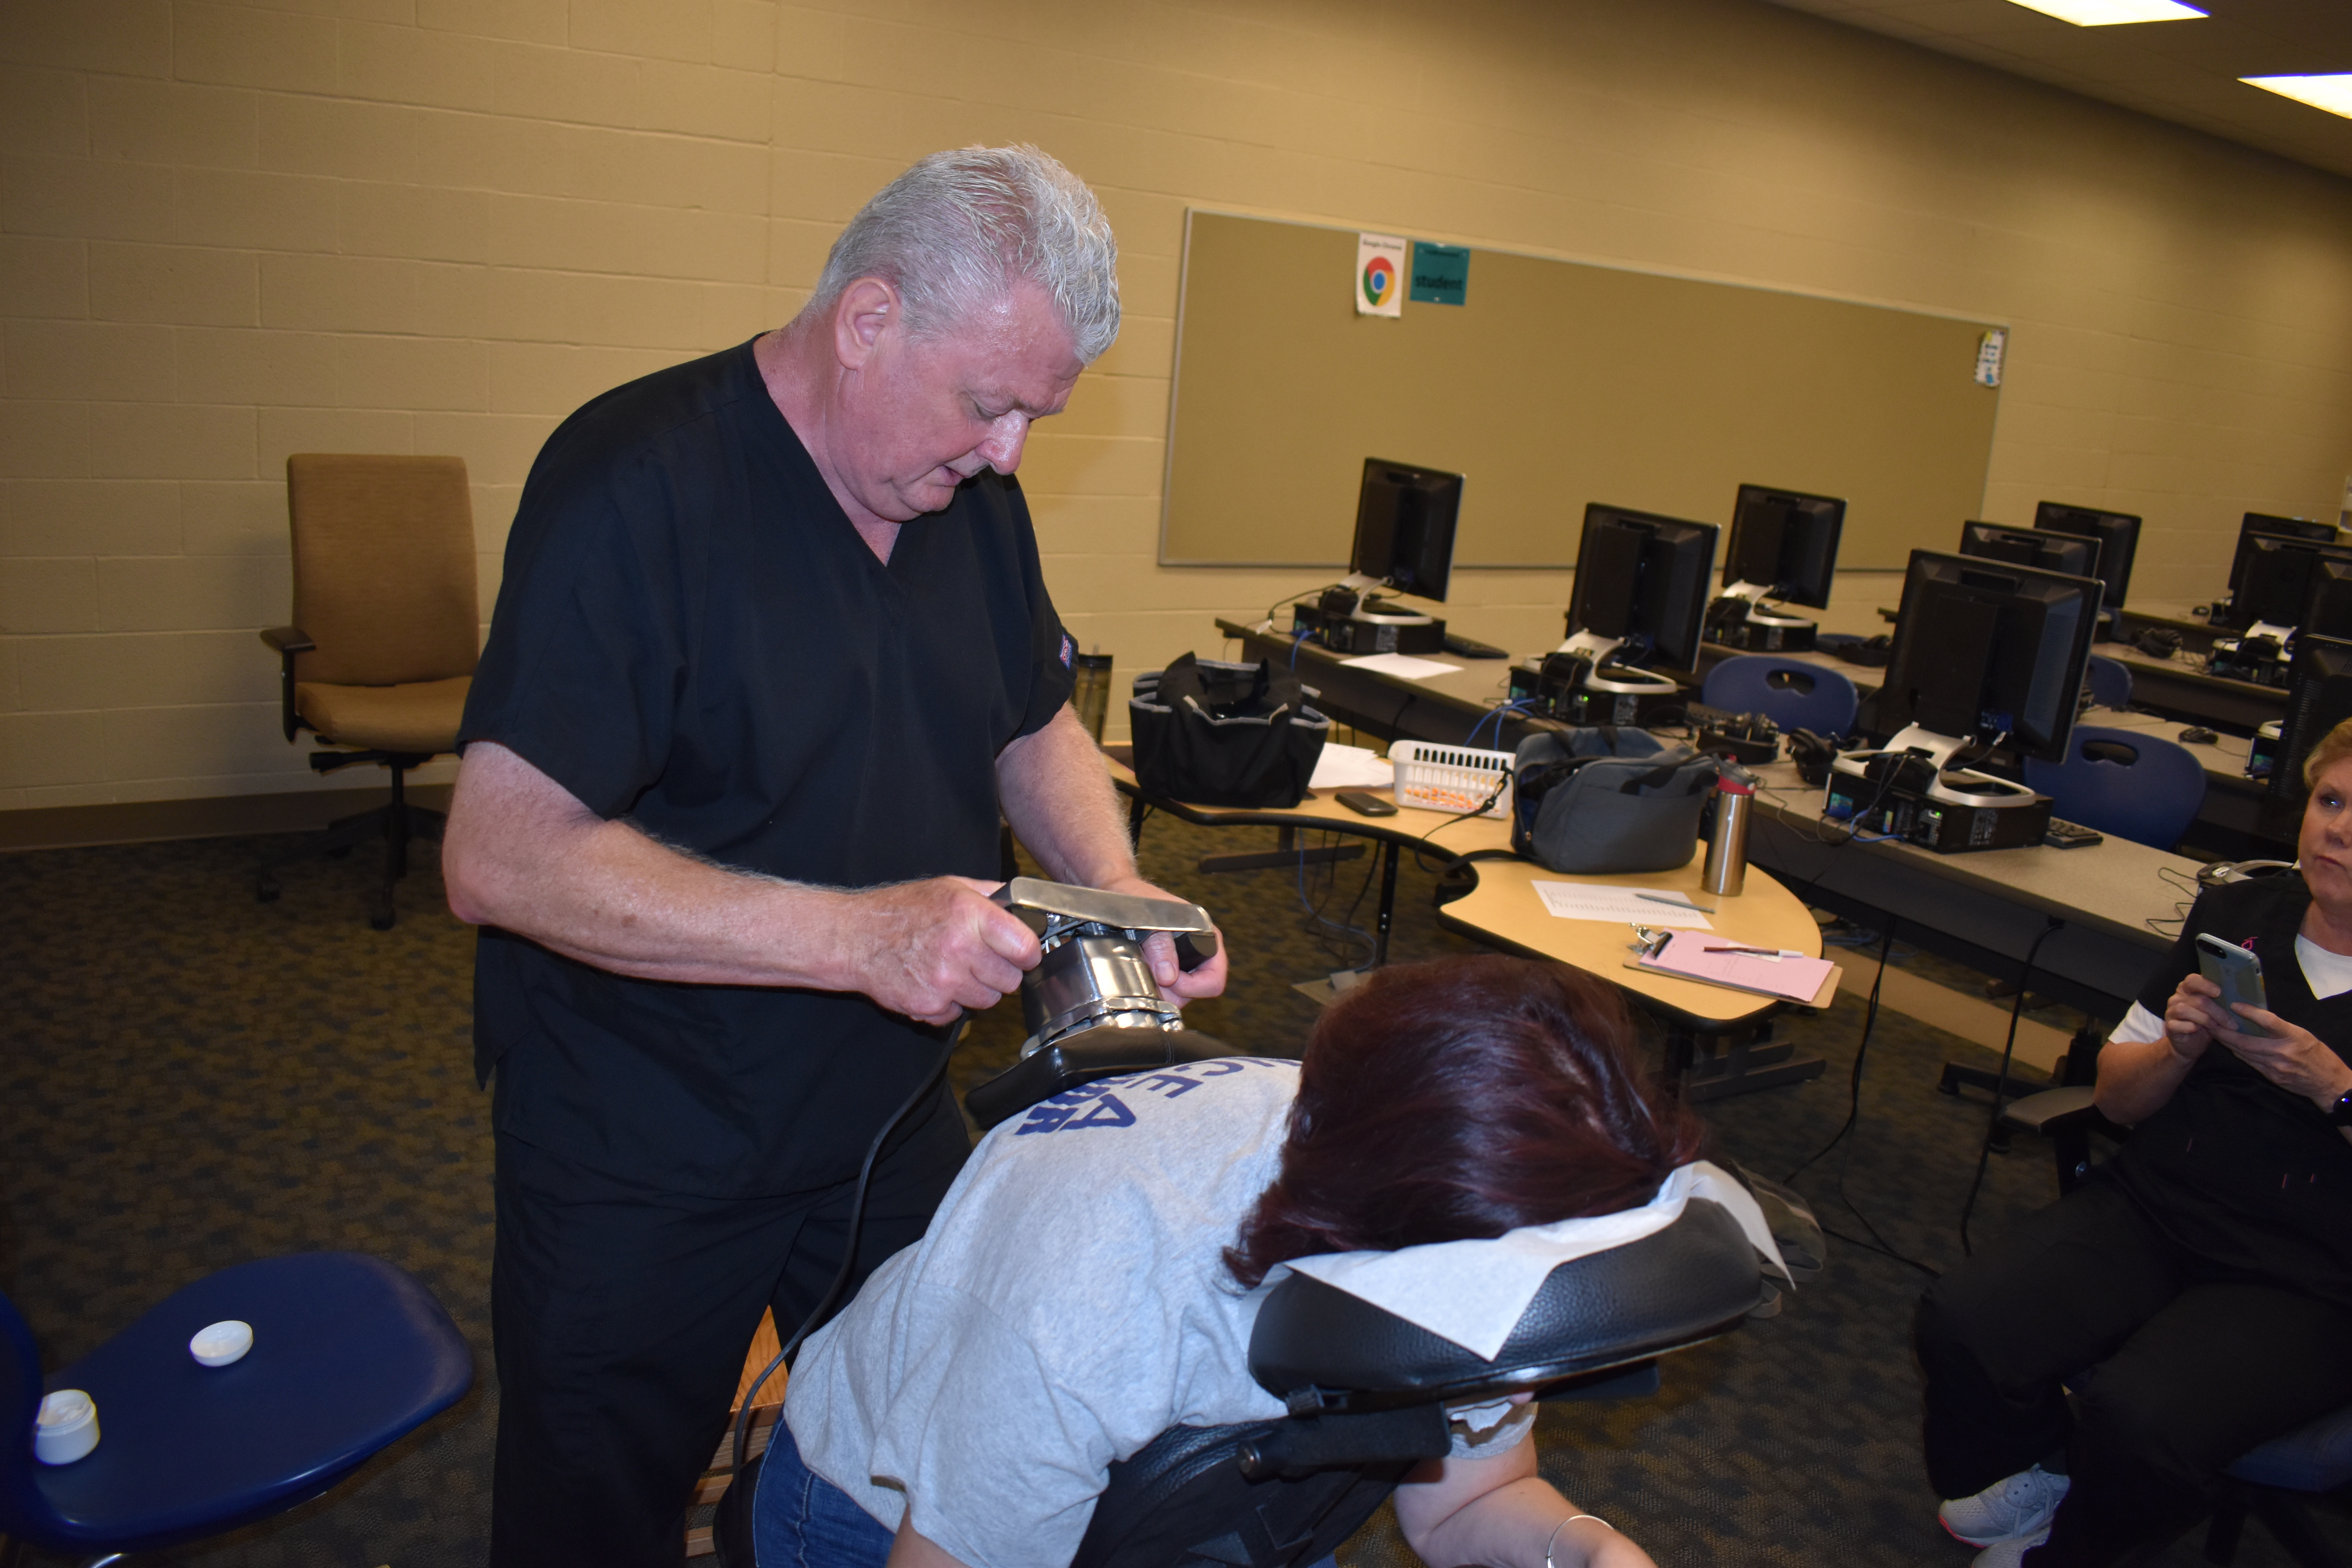 Licensed massage therapist Dave Hartman applies electronic stimulation to Brookfield High School intervention specialist Denise Hardway. Hartman offered free massages to school employees.